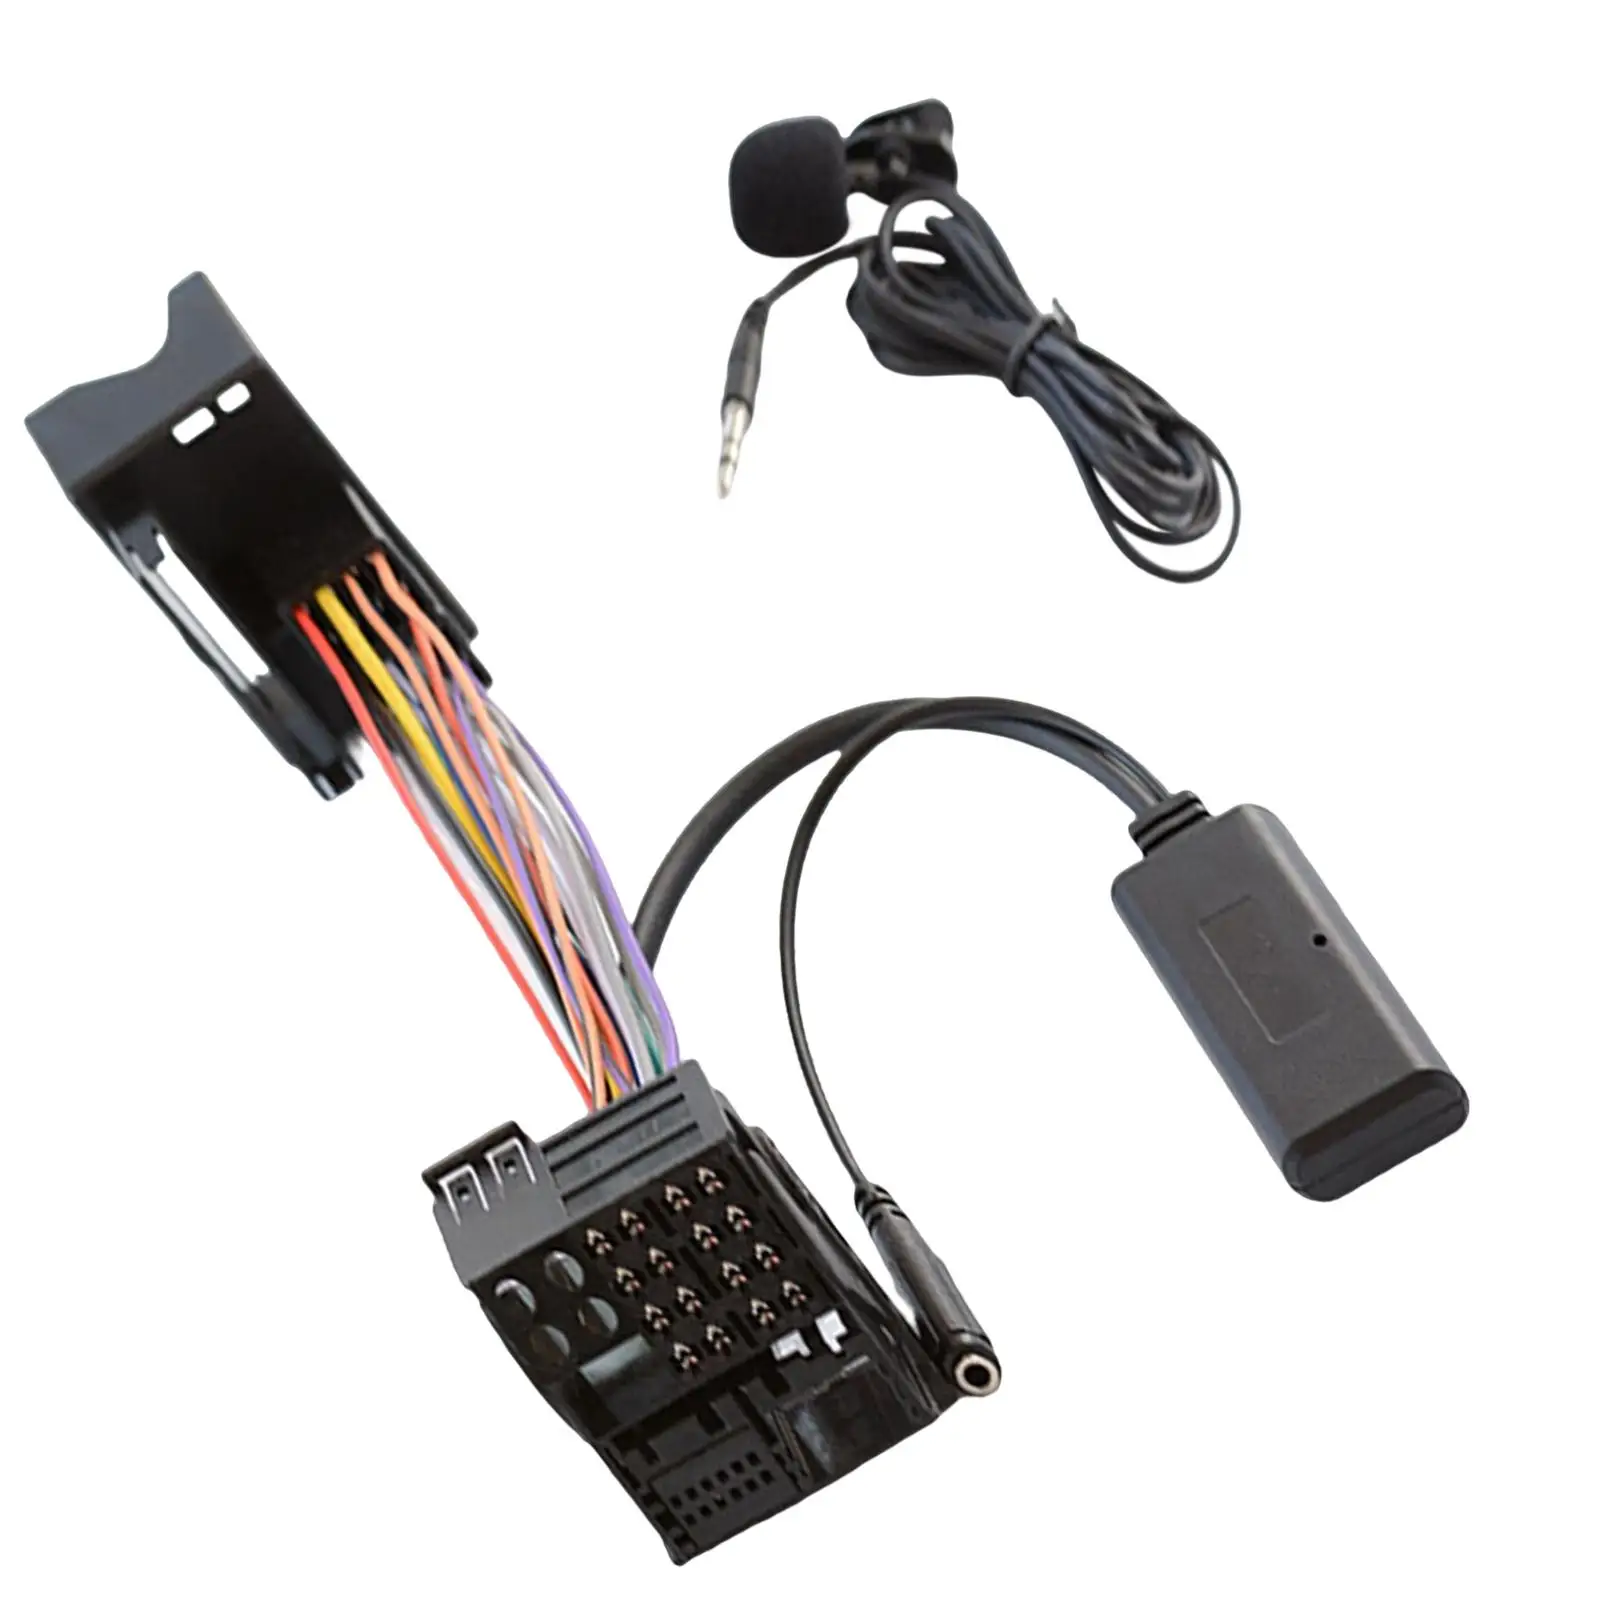 Car Bluetooth Audio Adapter Cable for R50 E85 E86 x3